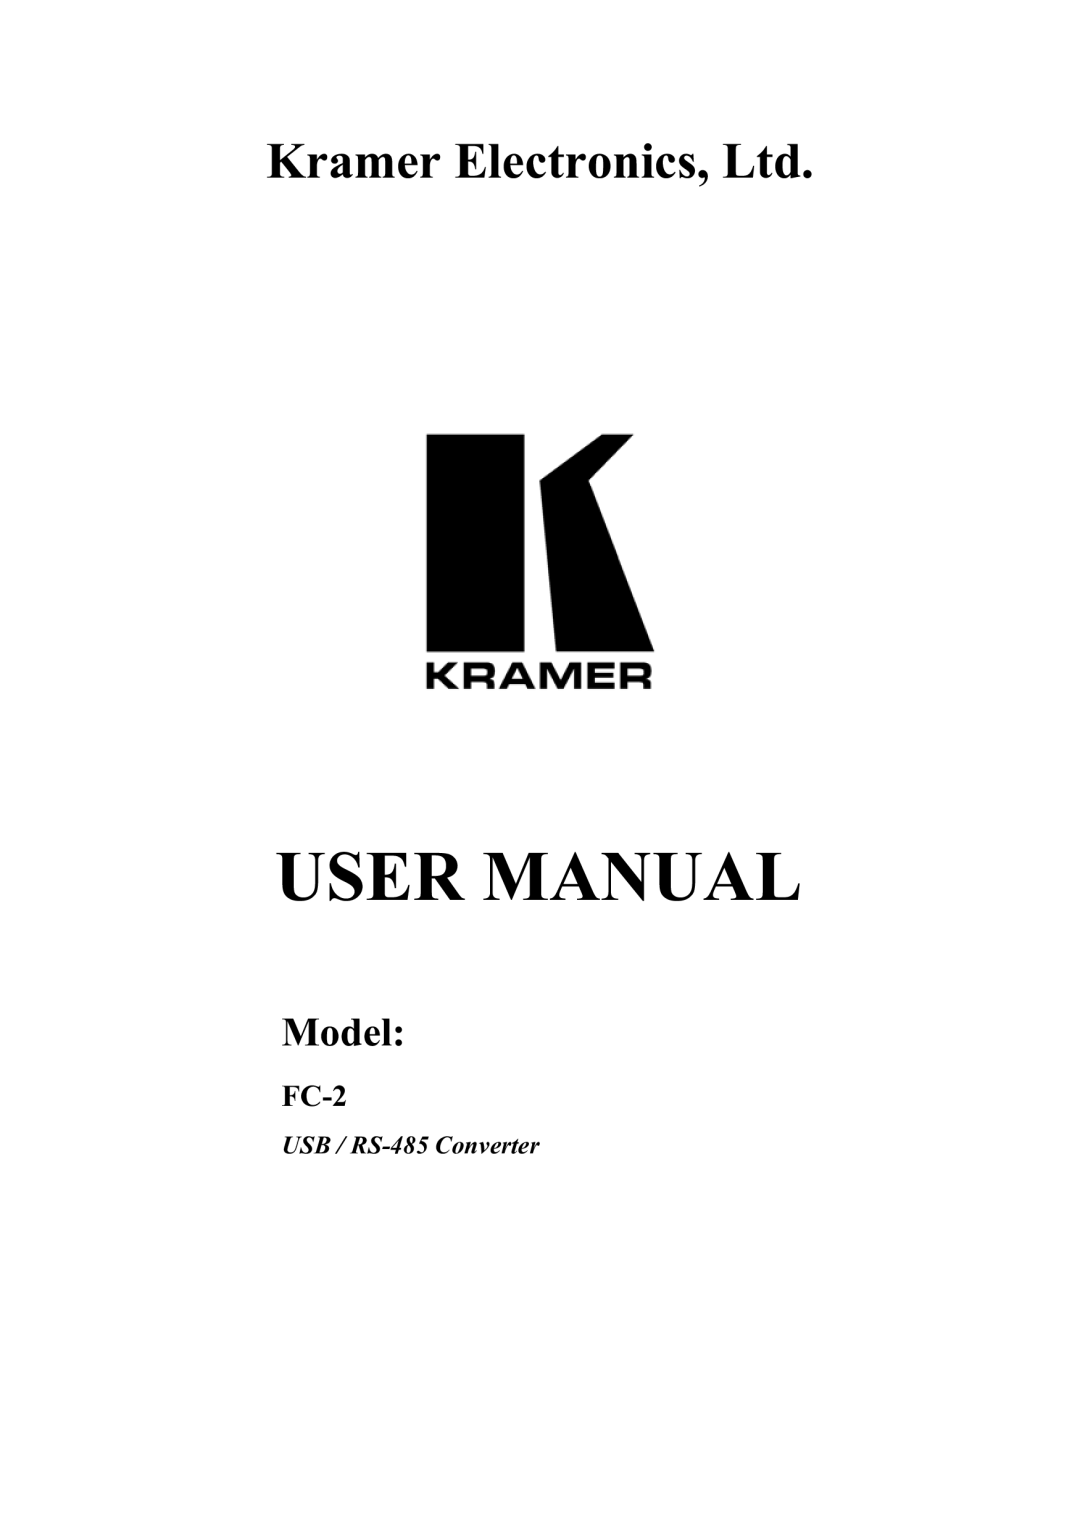 Kramer Electronics FC-2 manual 86%56&RQYHUWHU, 8650$18$, Udphuohfwurqlfv/Wg, 0RGHO 